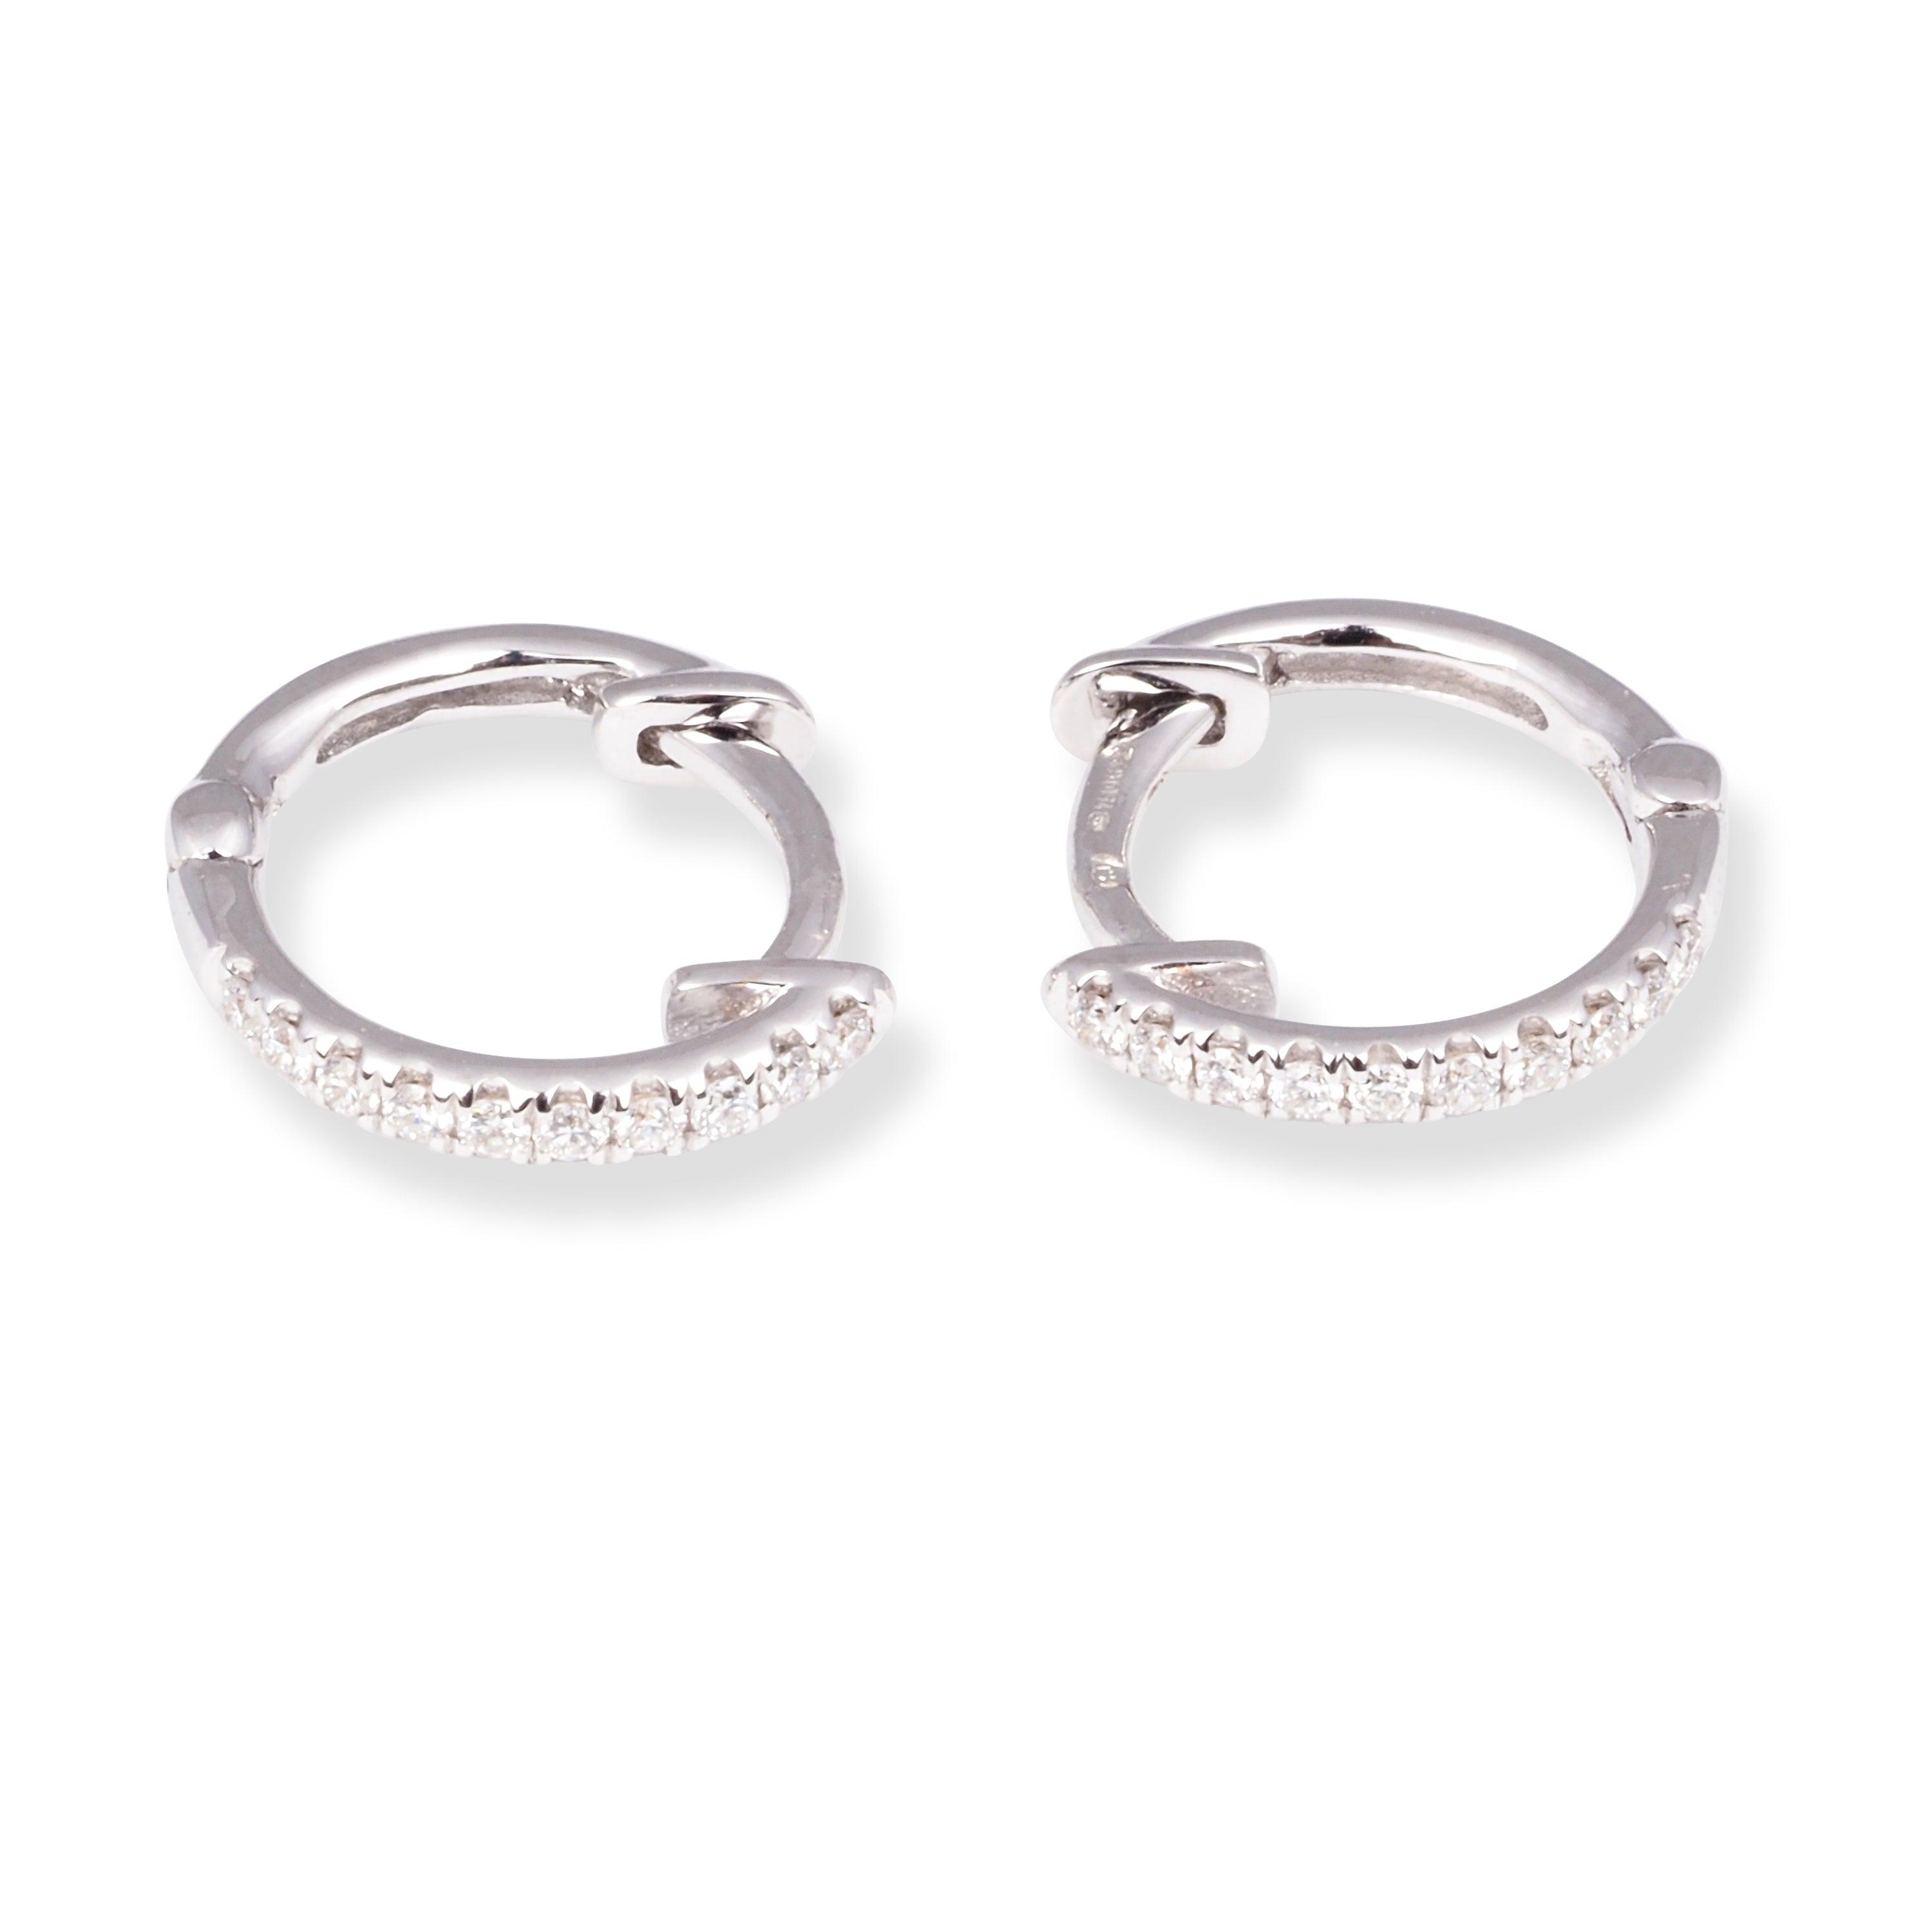 18ct White Gold Huggie Hoop Diamond Earrings E-7976 - Minar Jewellers